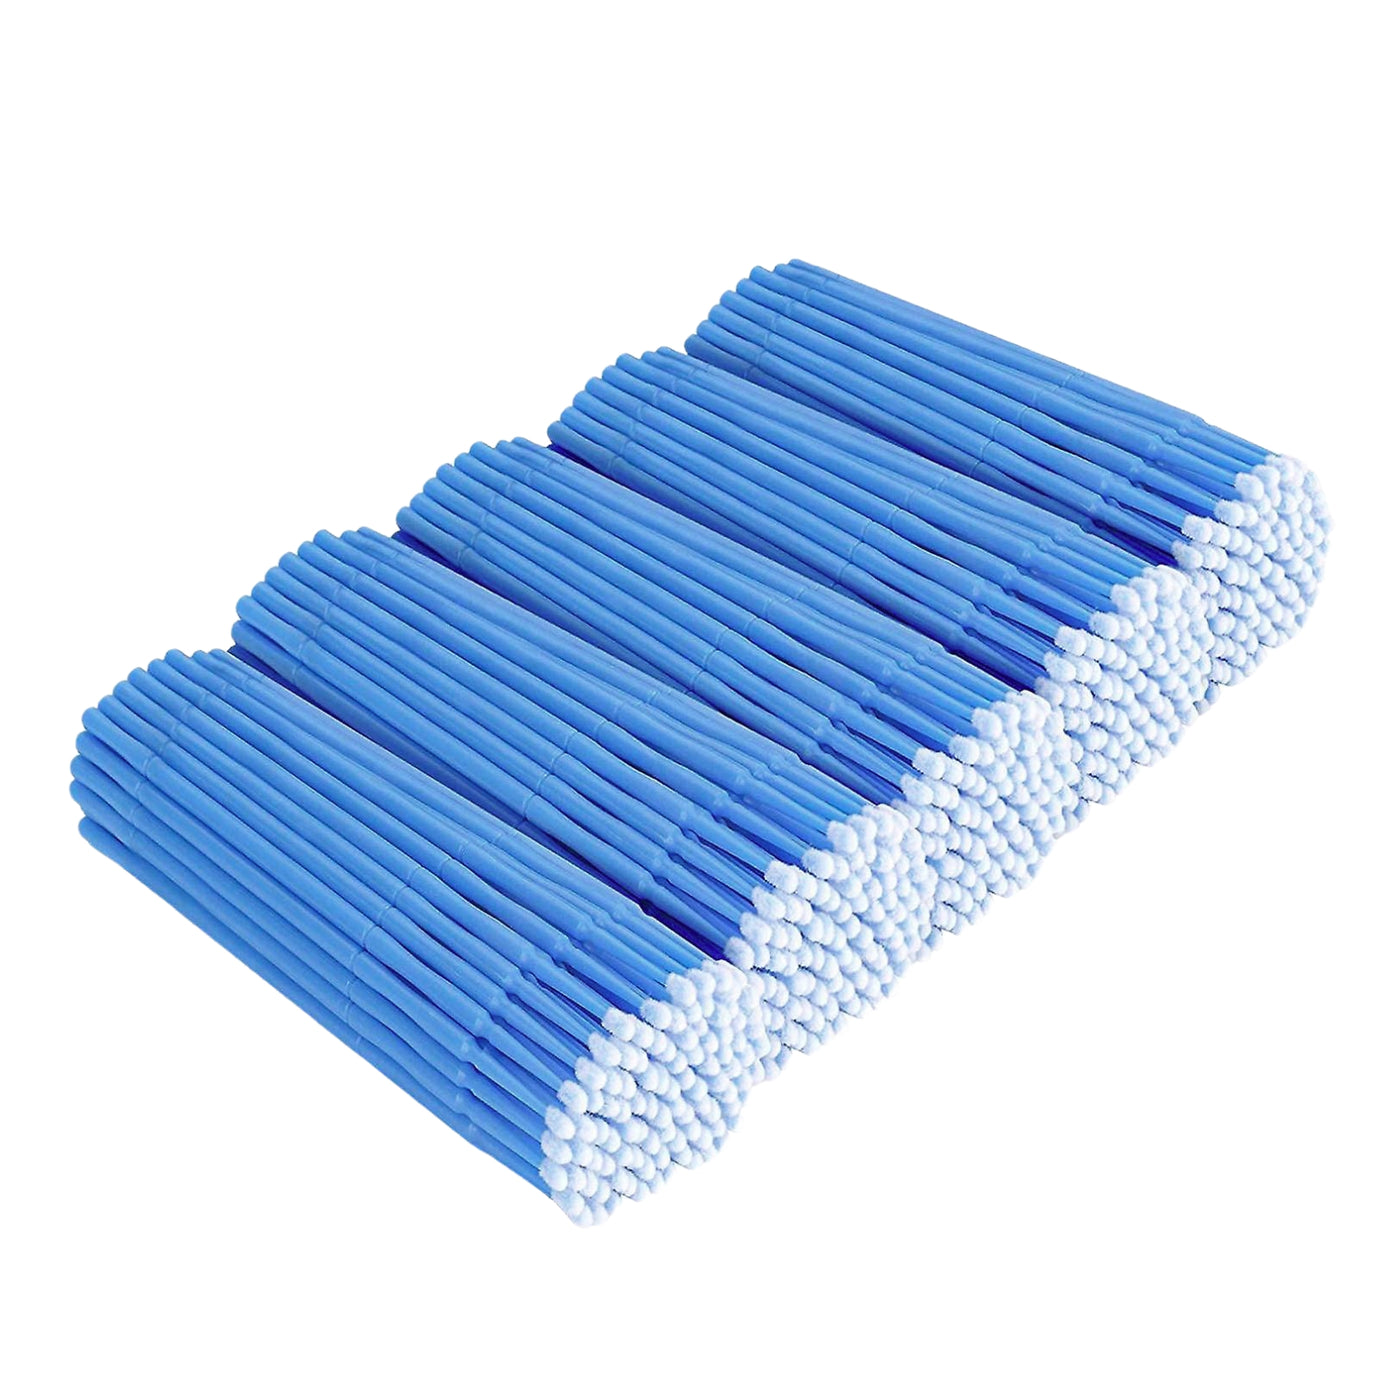 Micro Brush Applicators Lash Jungle Royal Blue, 10 Pack